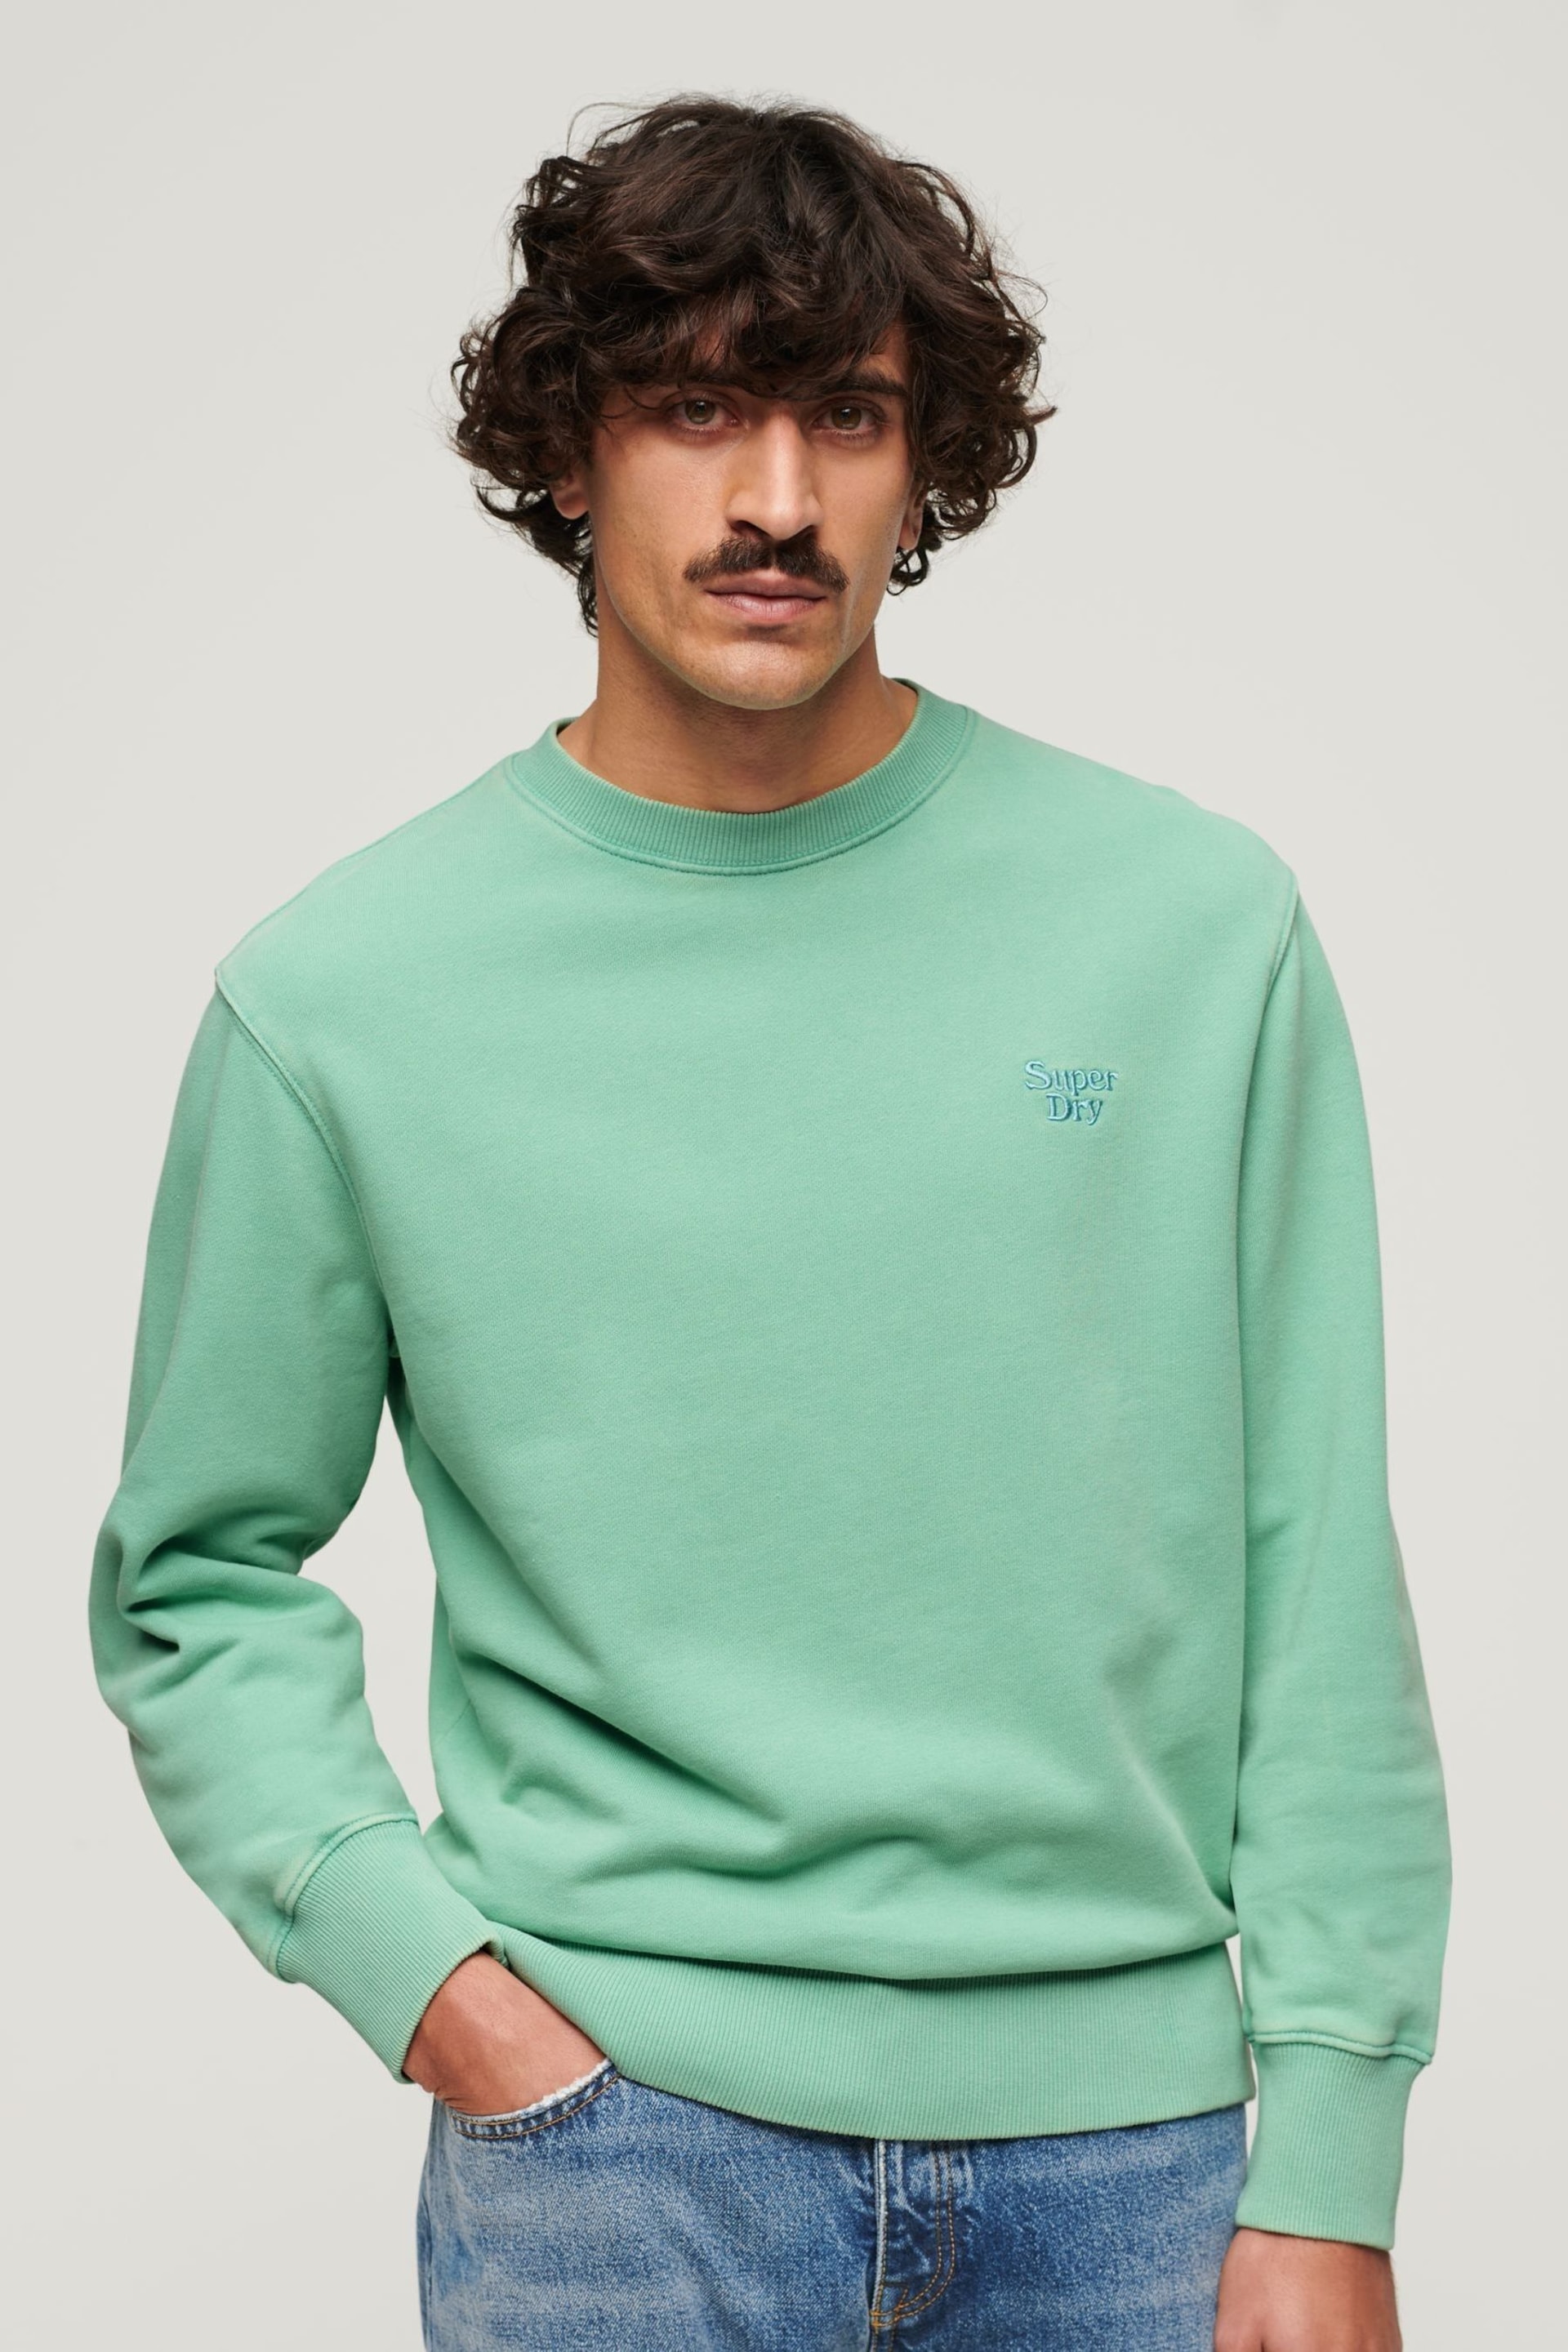 Superdry Green Vintage Washed Sweatshirt - Image 1 of 6